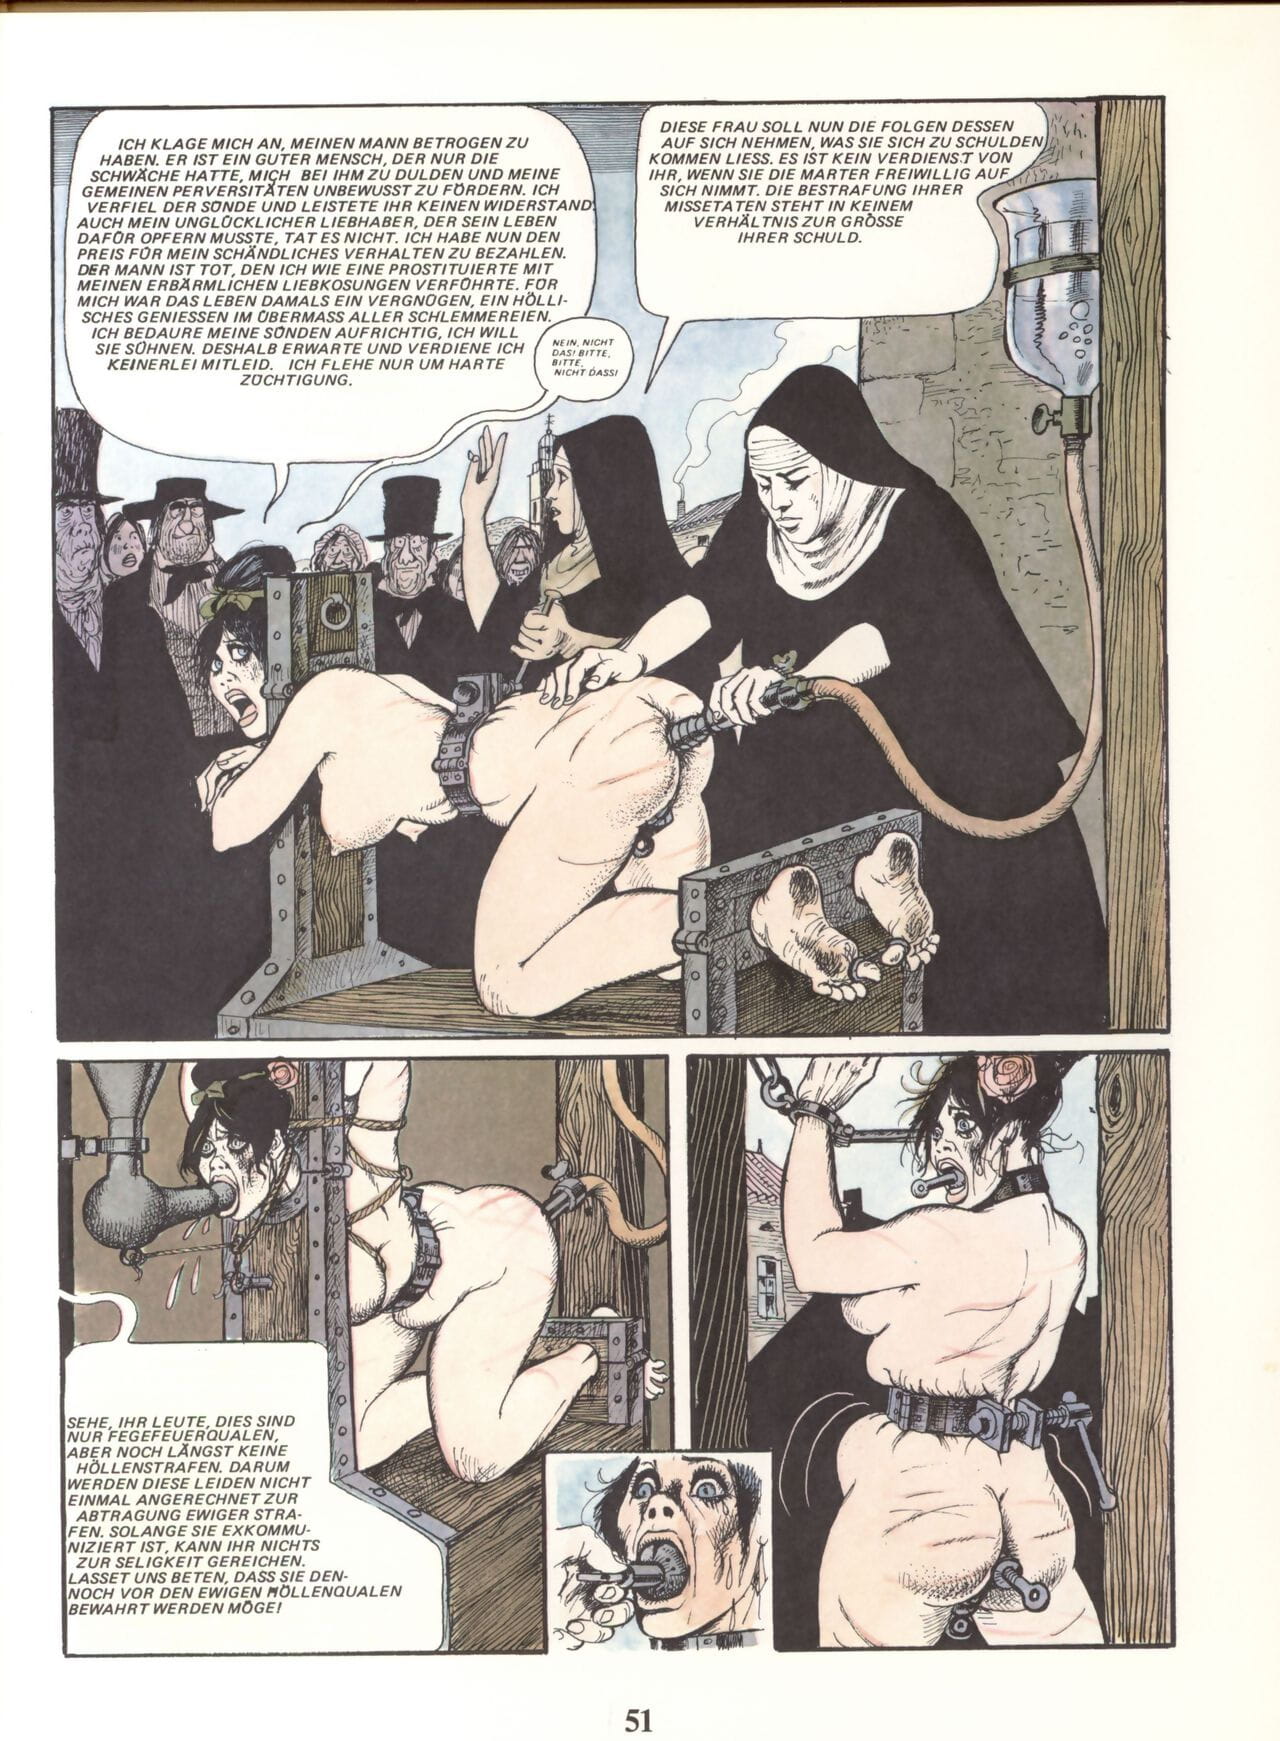 Marie Gabriel De St eutropa #02 część 5 page 1